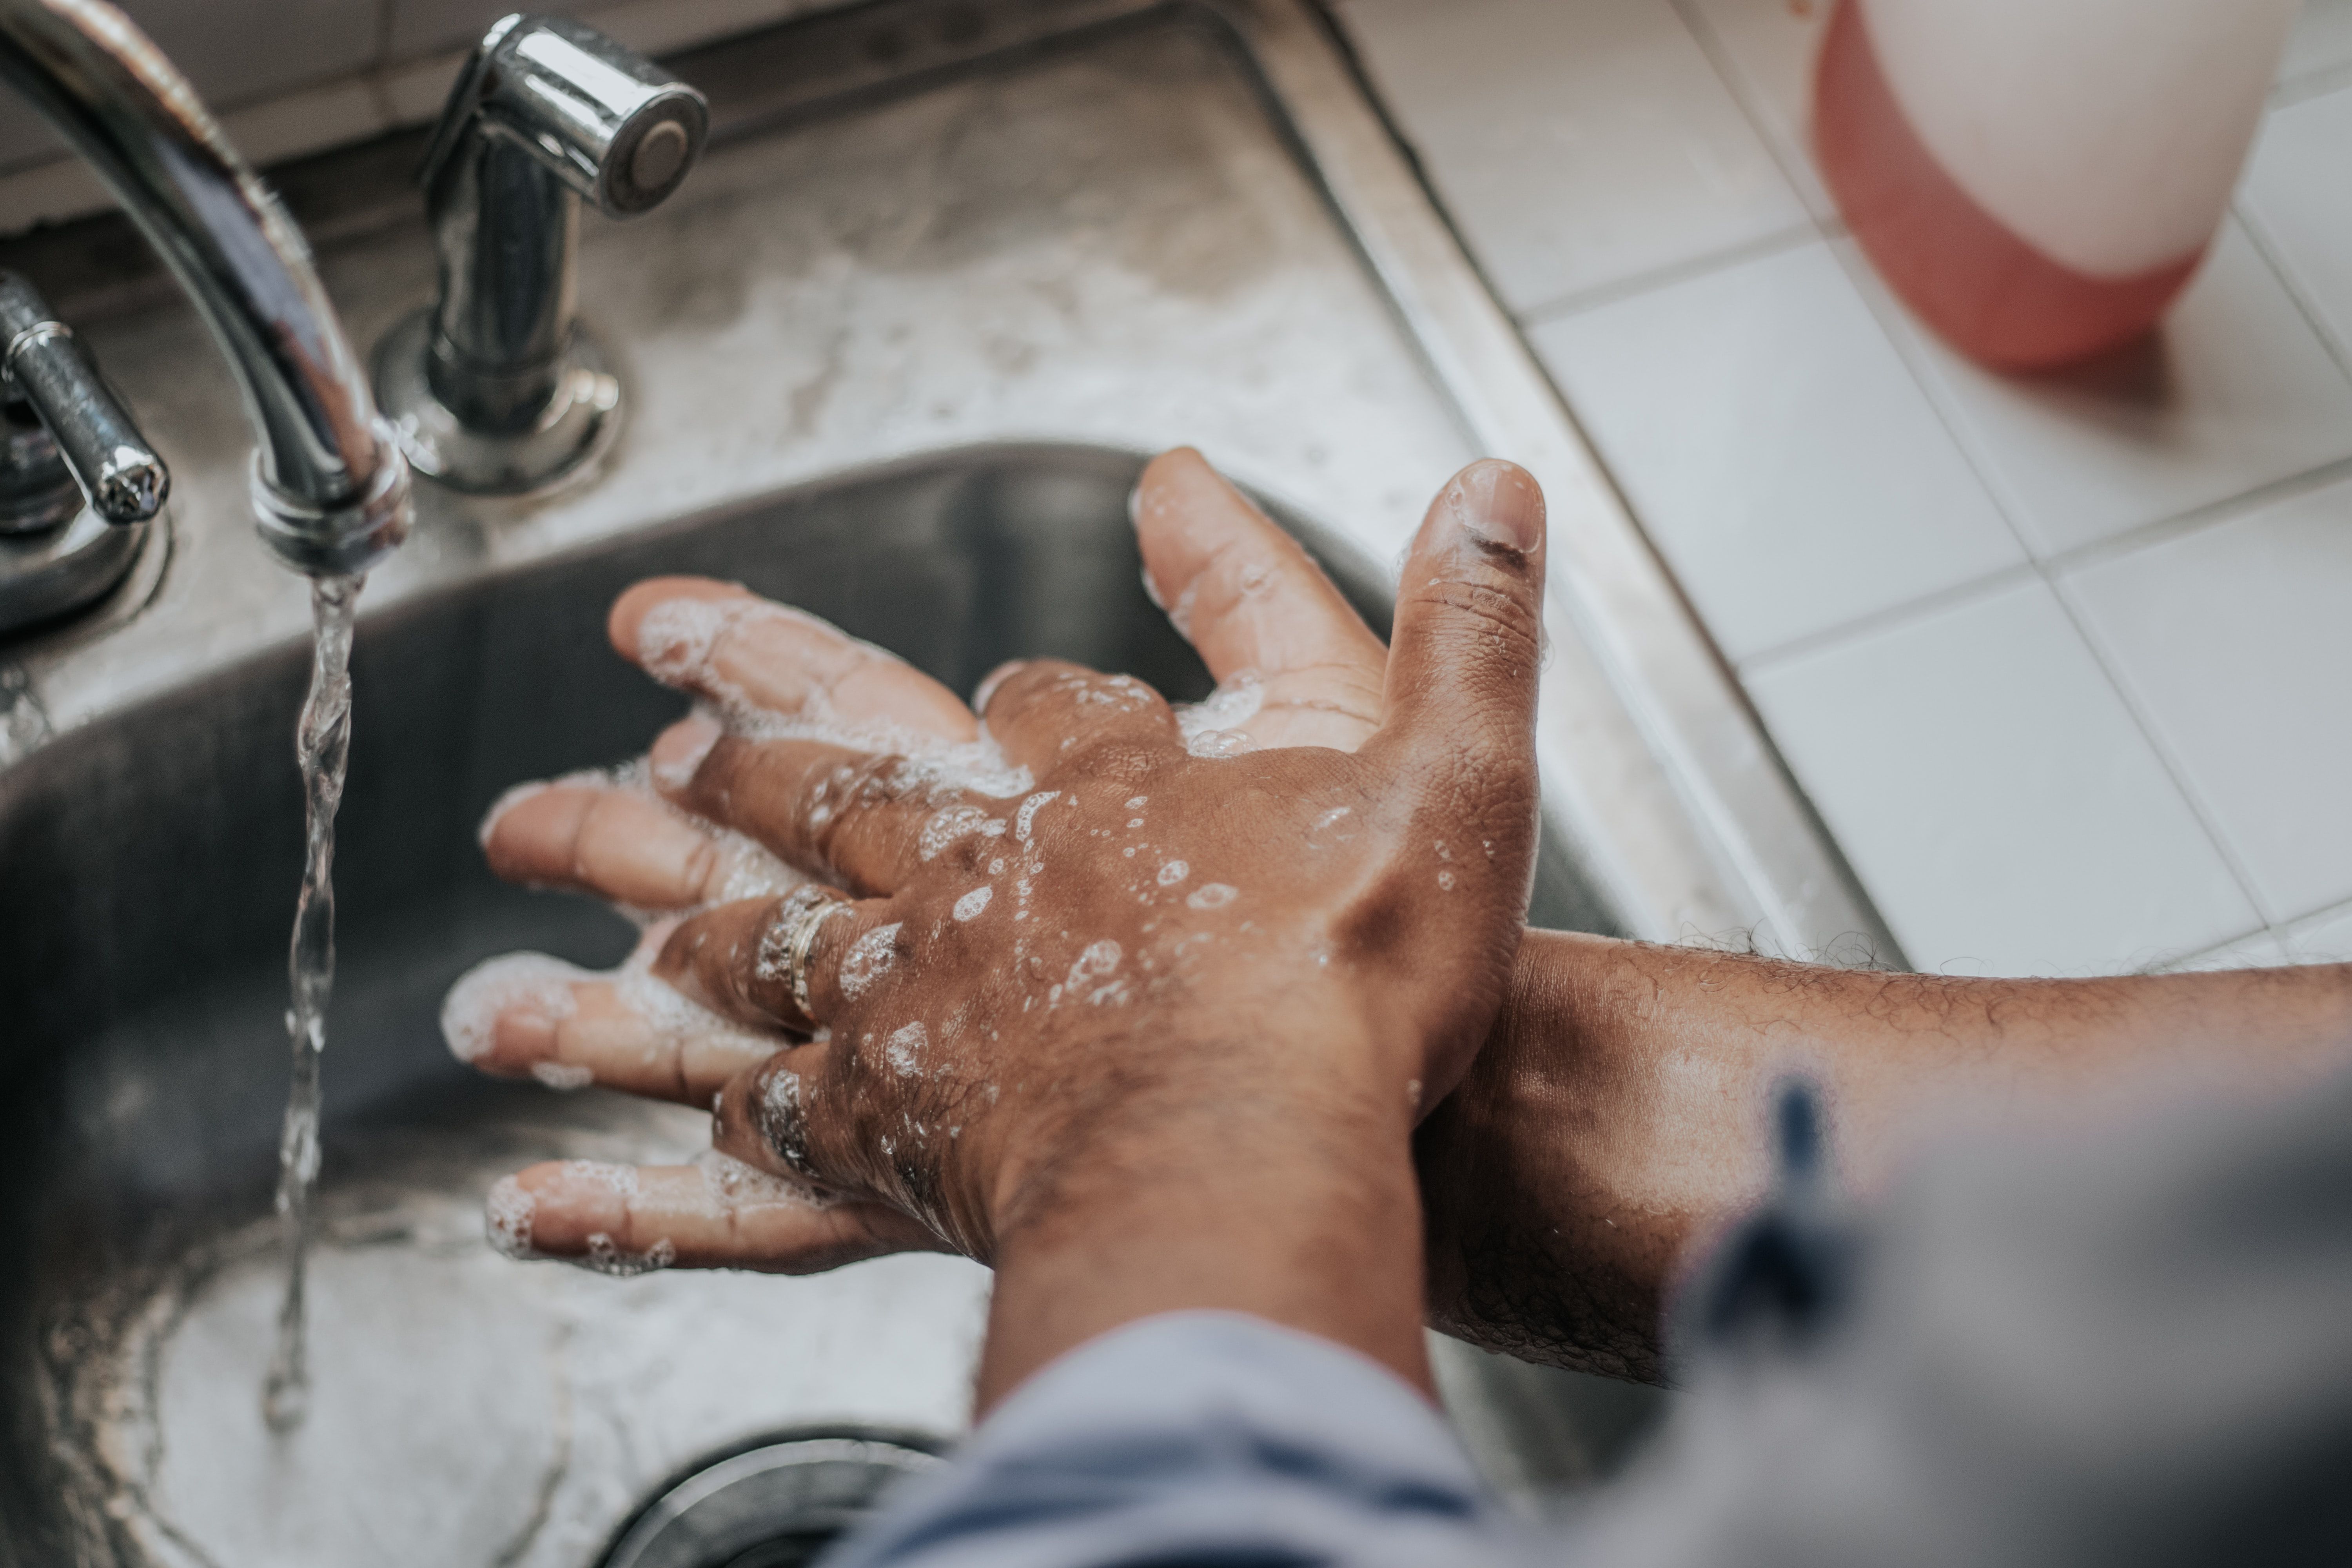 A man washing hands